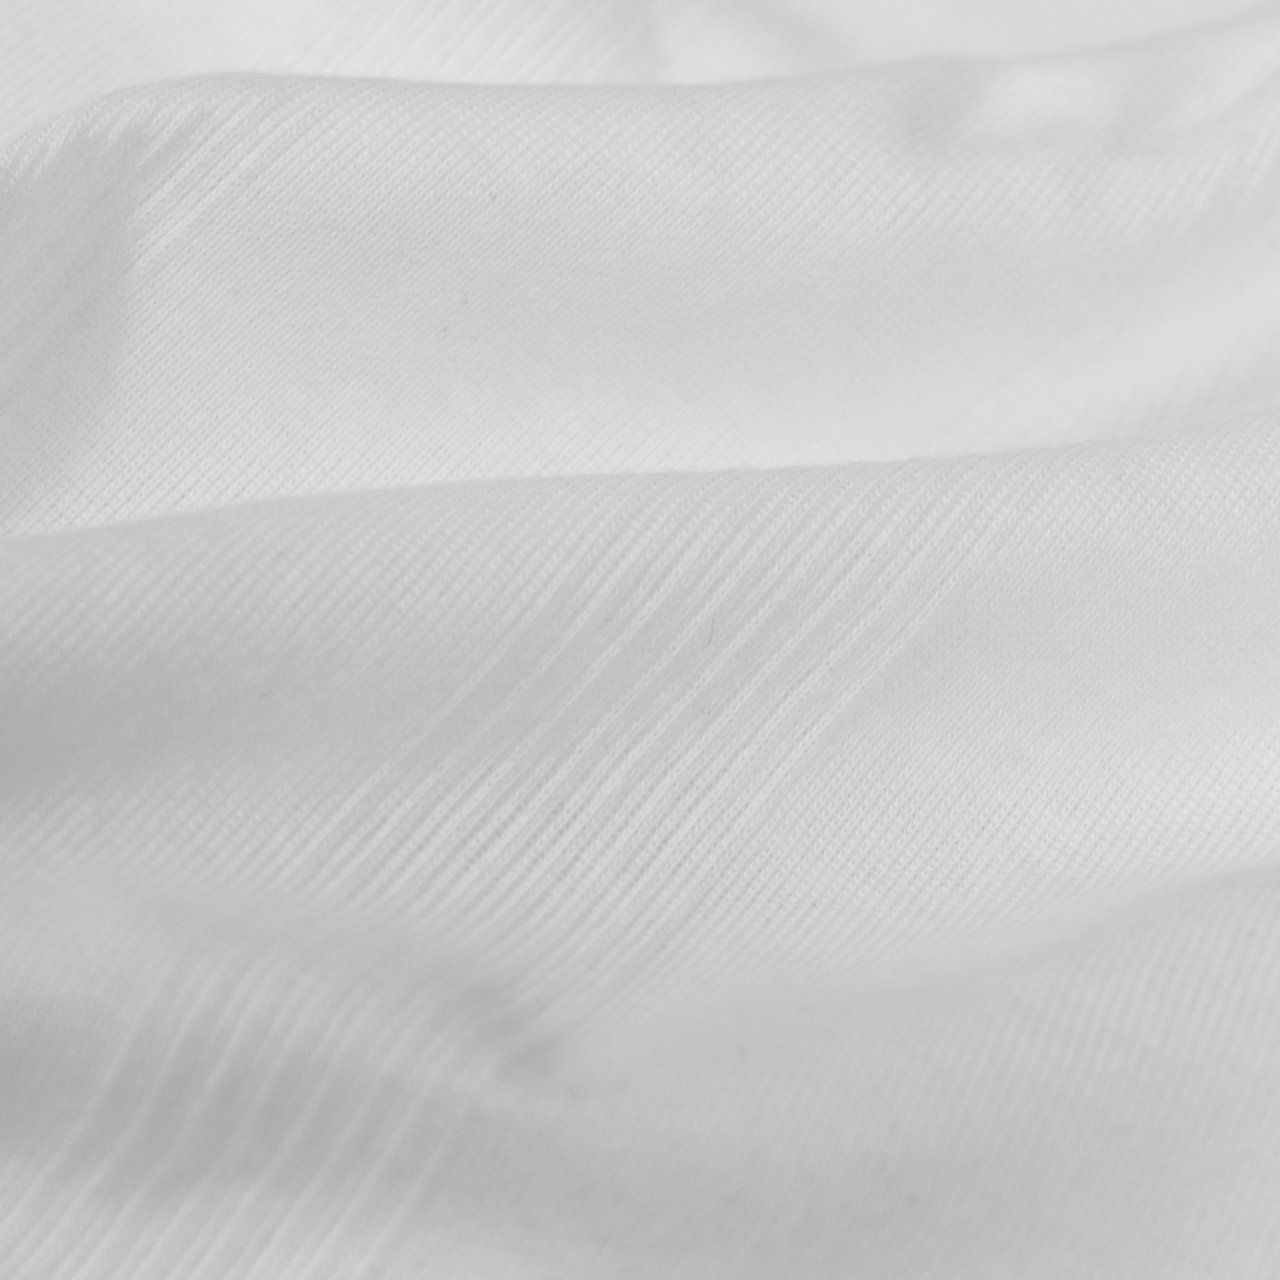 UNIVERSAL PRODUCTS. (ユニバーサルプロダクツ) 24SS/春夏
MILLER 2PAC TANK TOP WHITE
タンクトップ
パックTシャツ